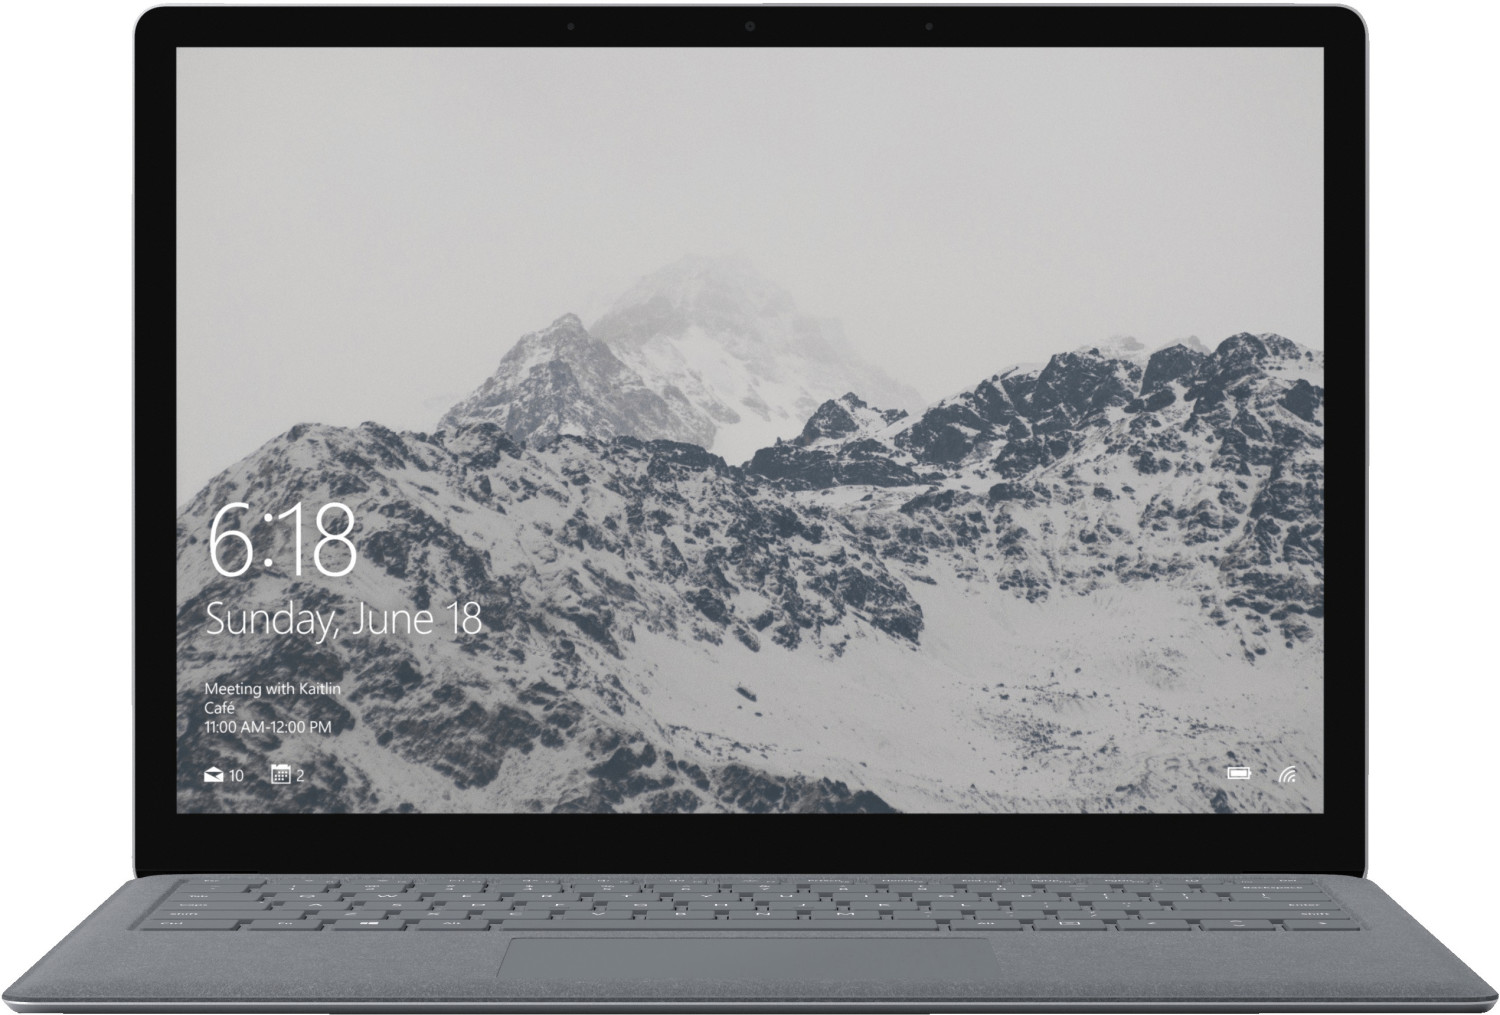 Microsoft Surface Laptop i7 512GB silber